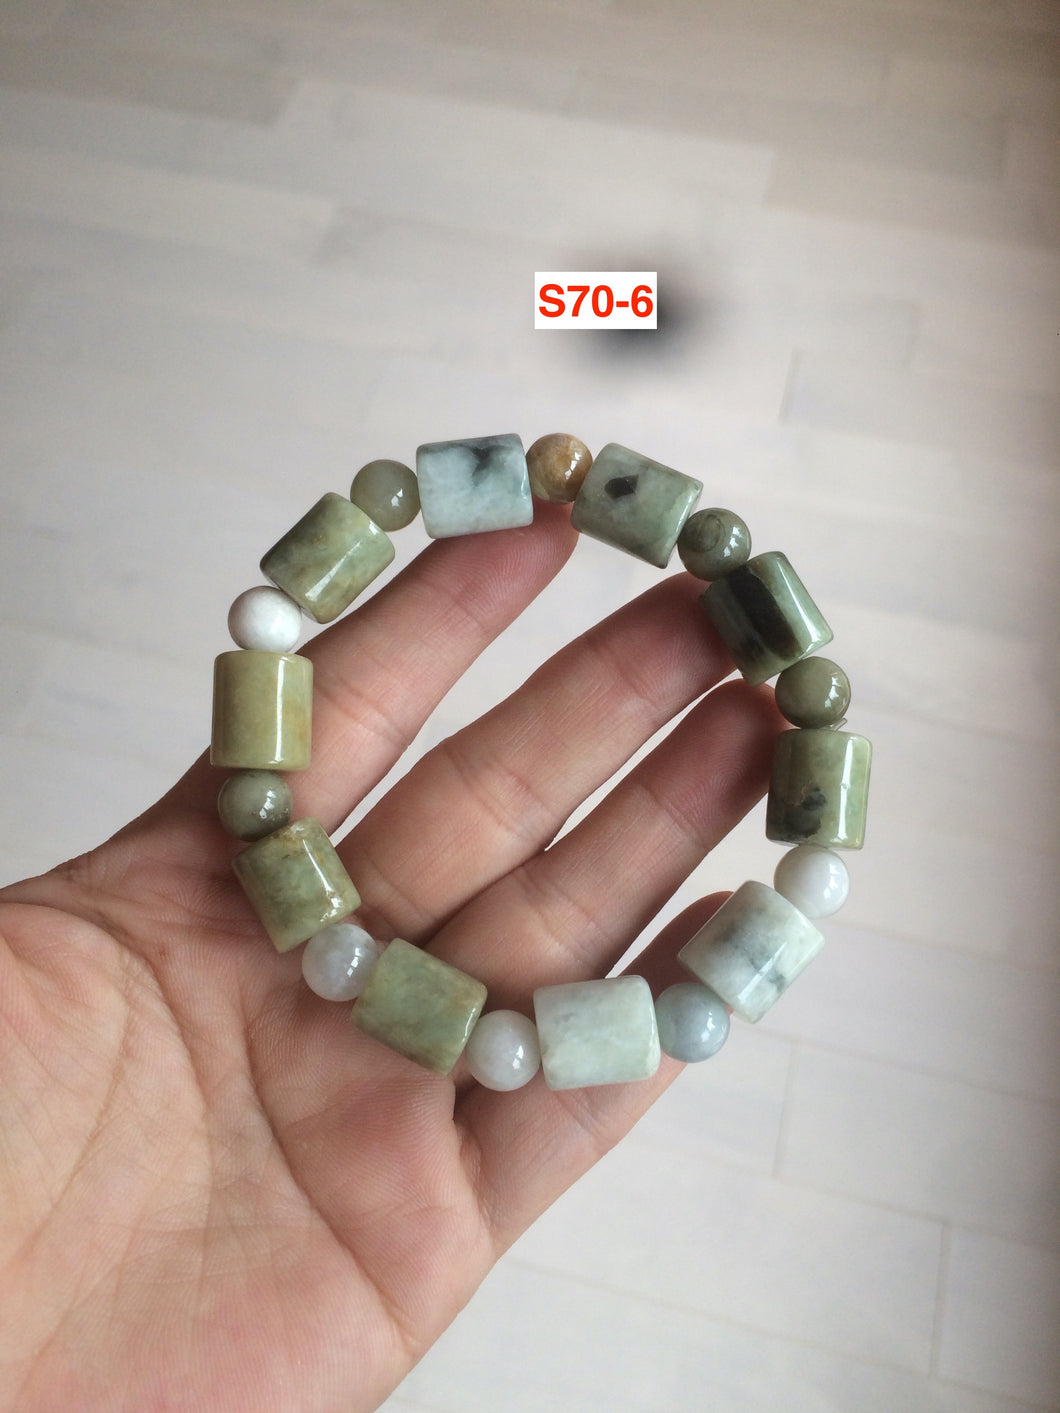 100% natural type A  green/purple/brown jadeite jade beads bracelet S70